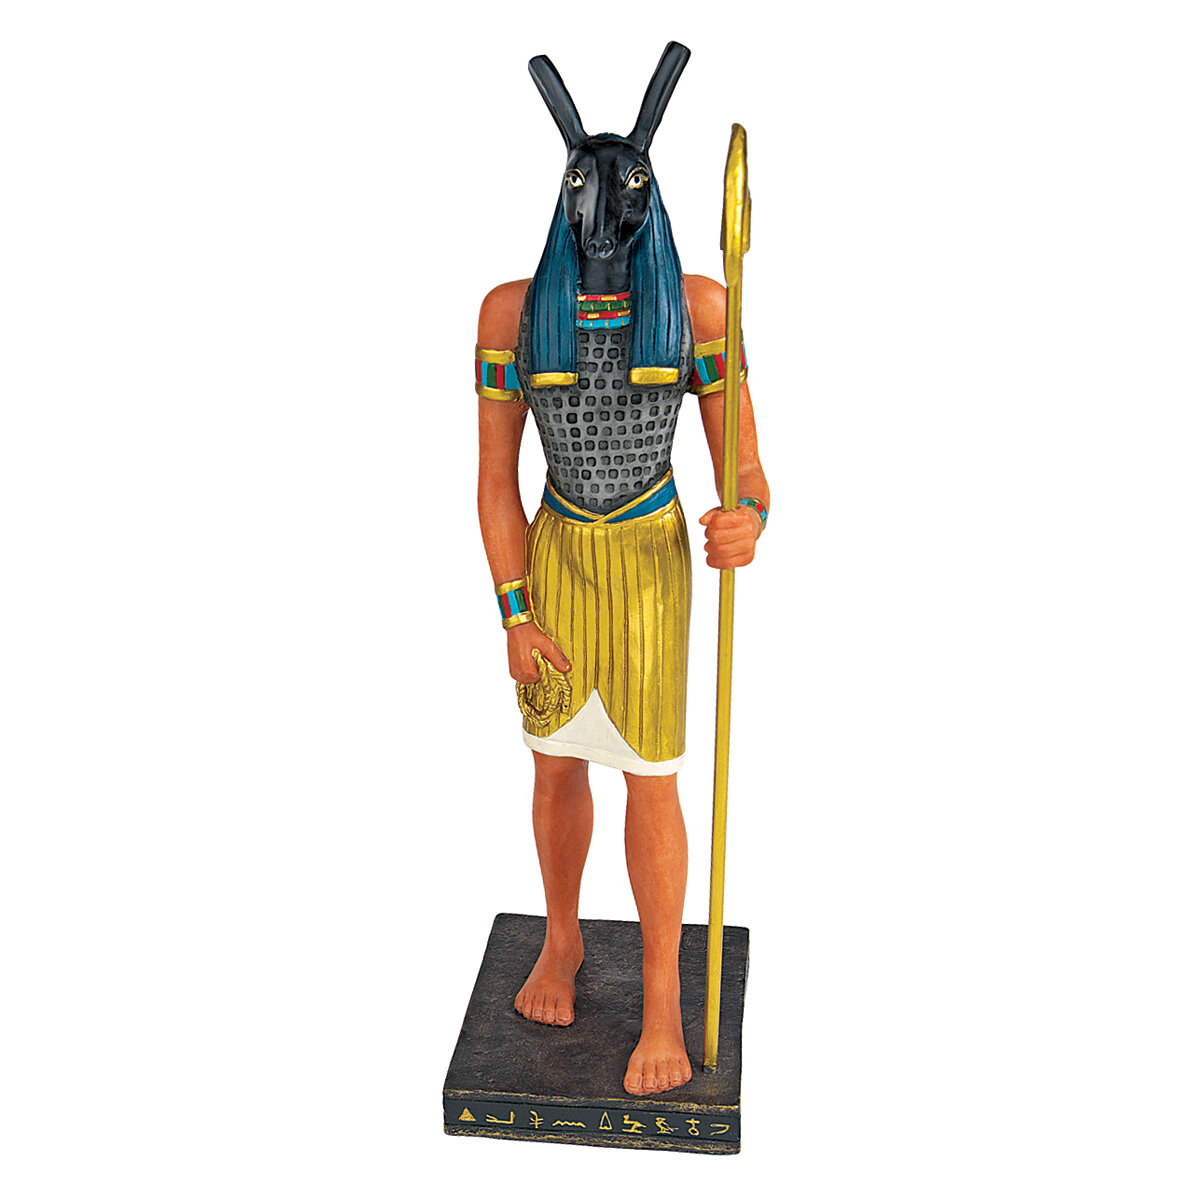 seth egyptian god statue